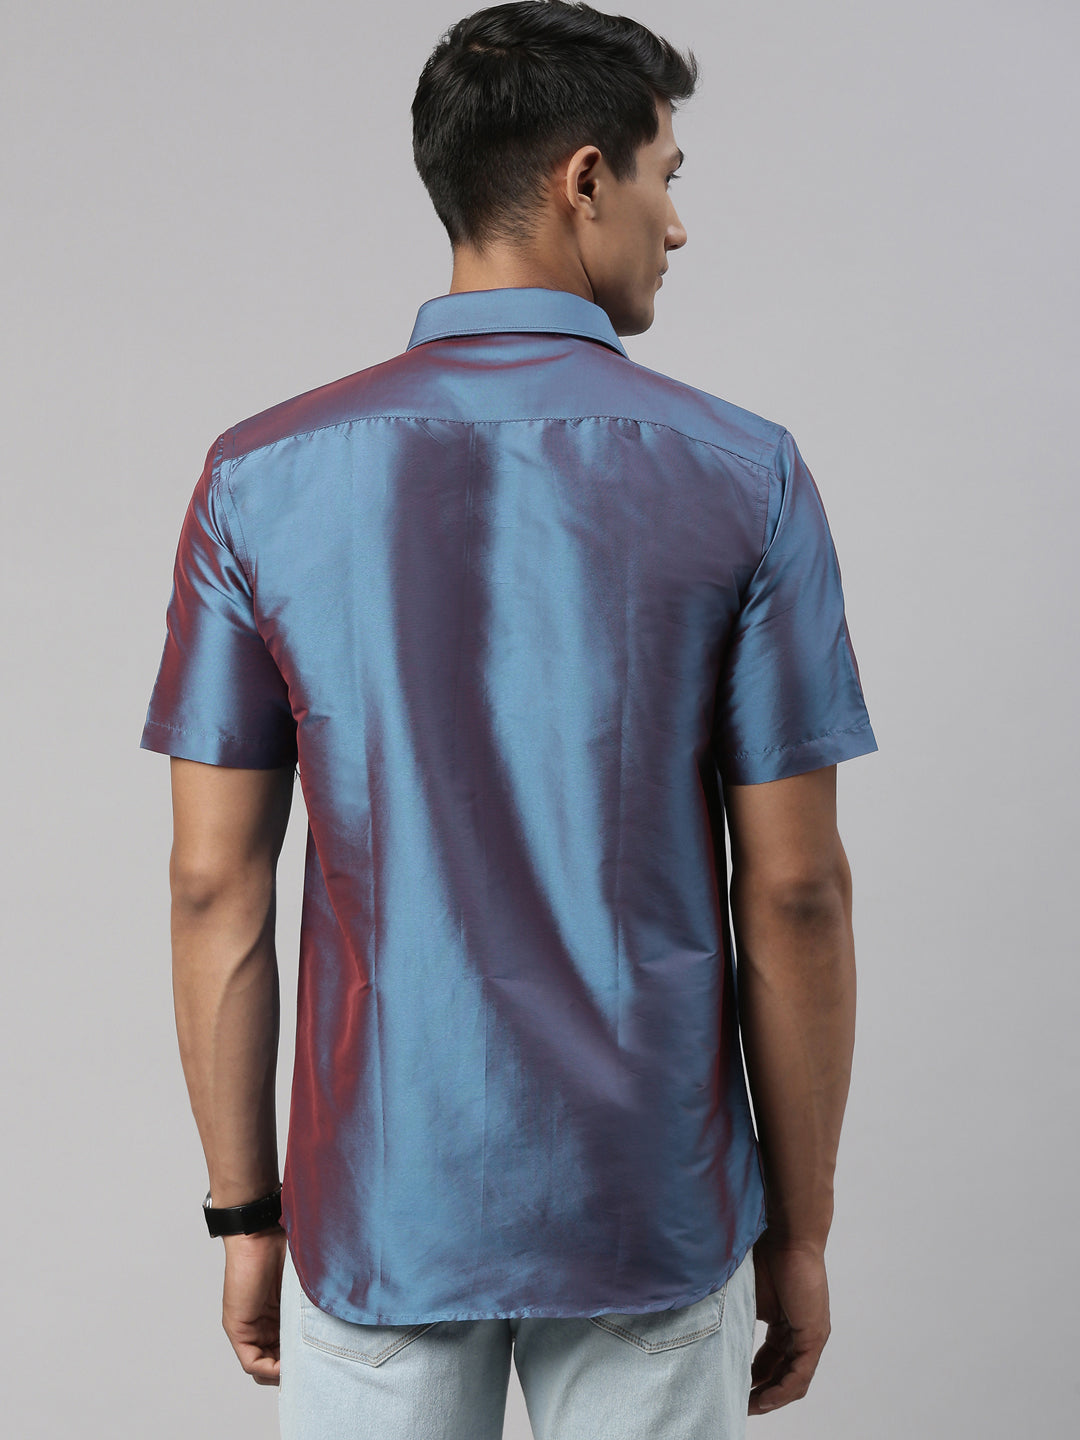 Tattva Mens Blue Colour Half sleeve Shirt